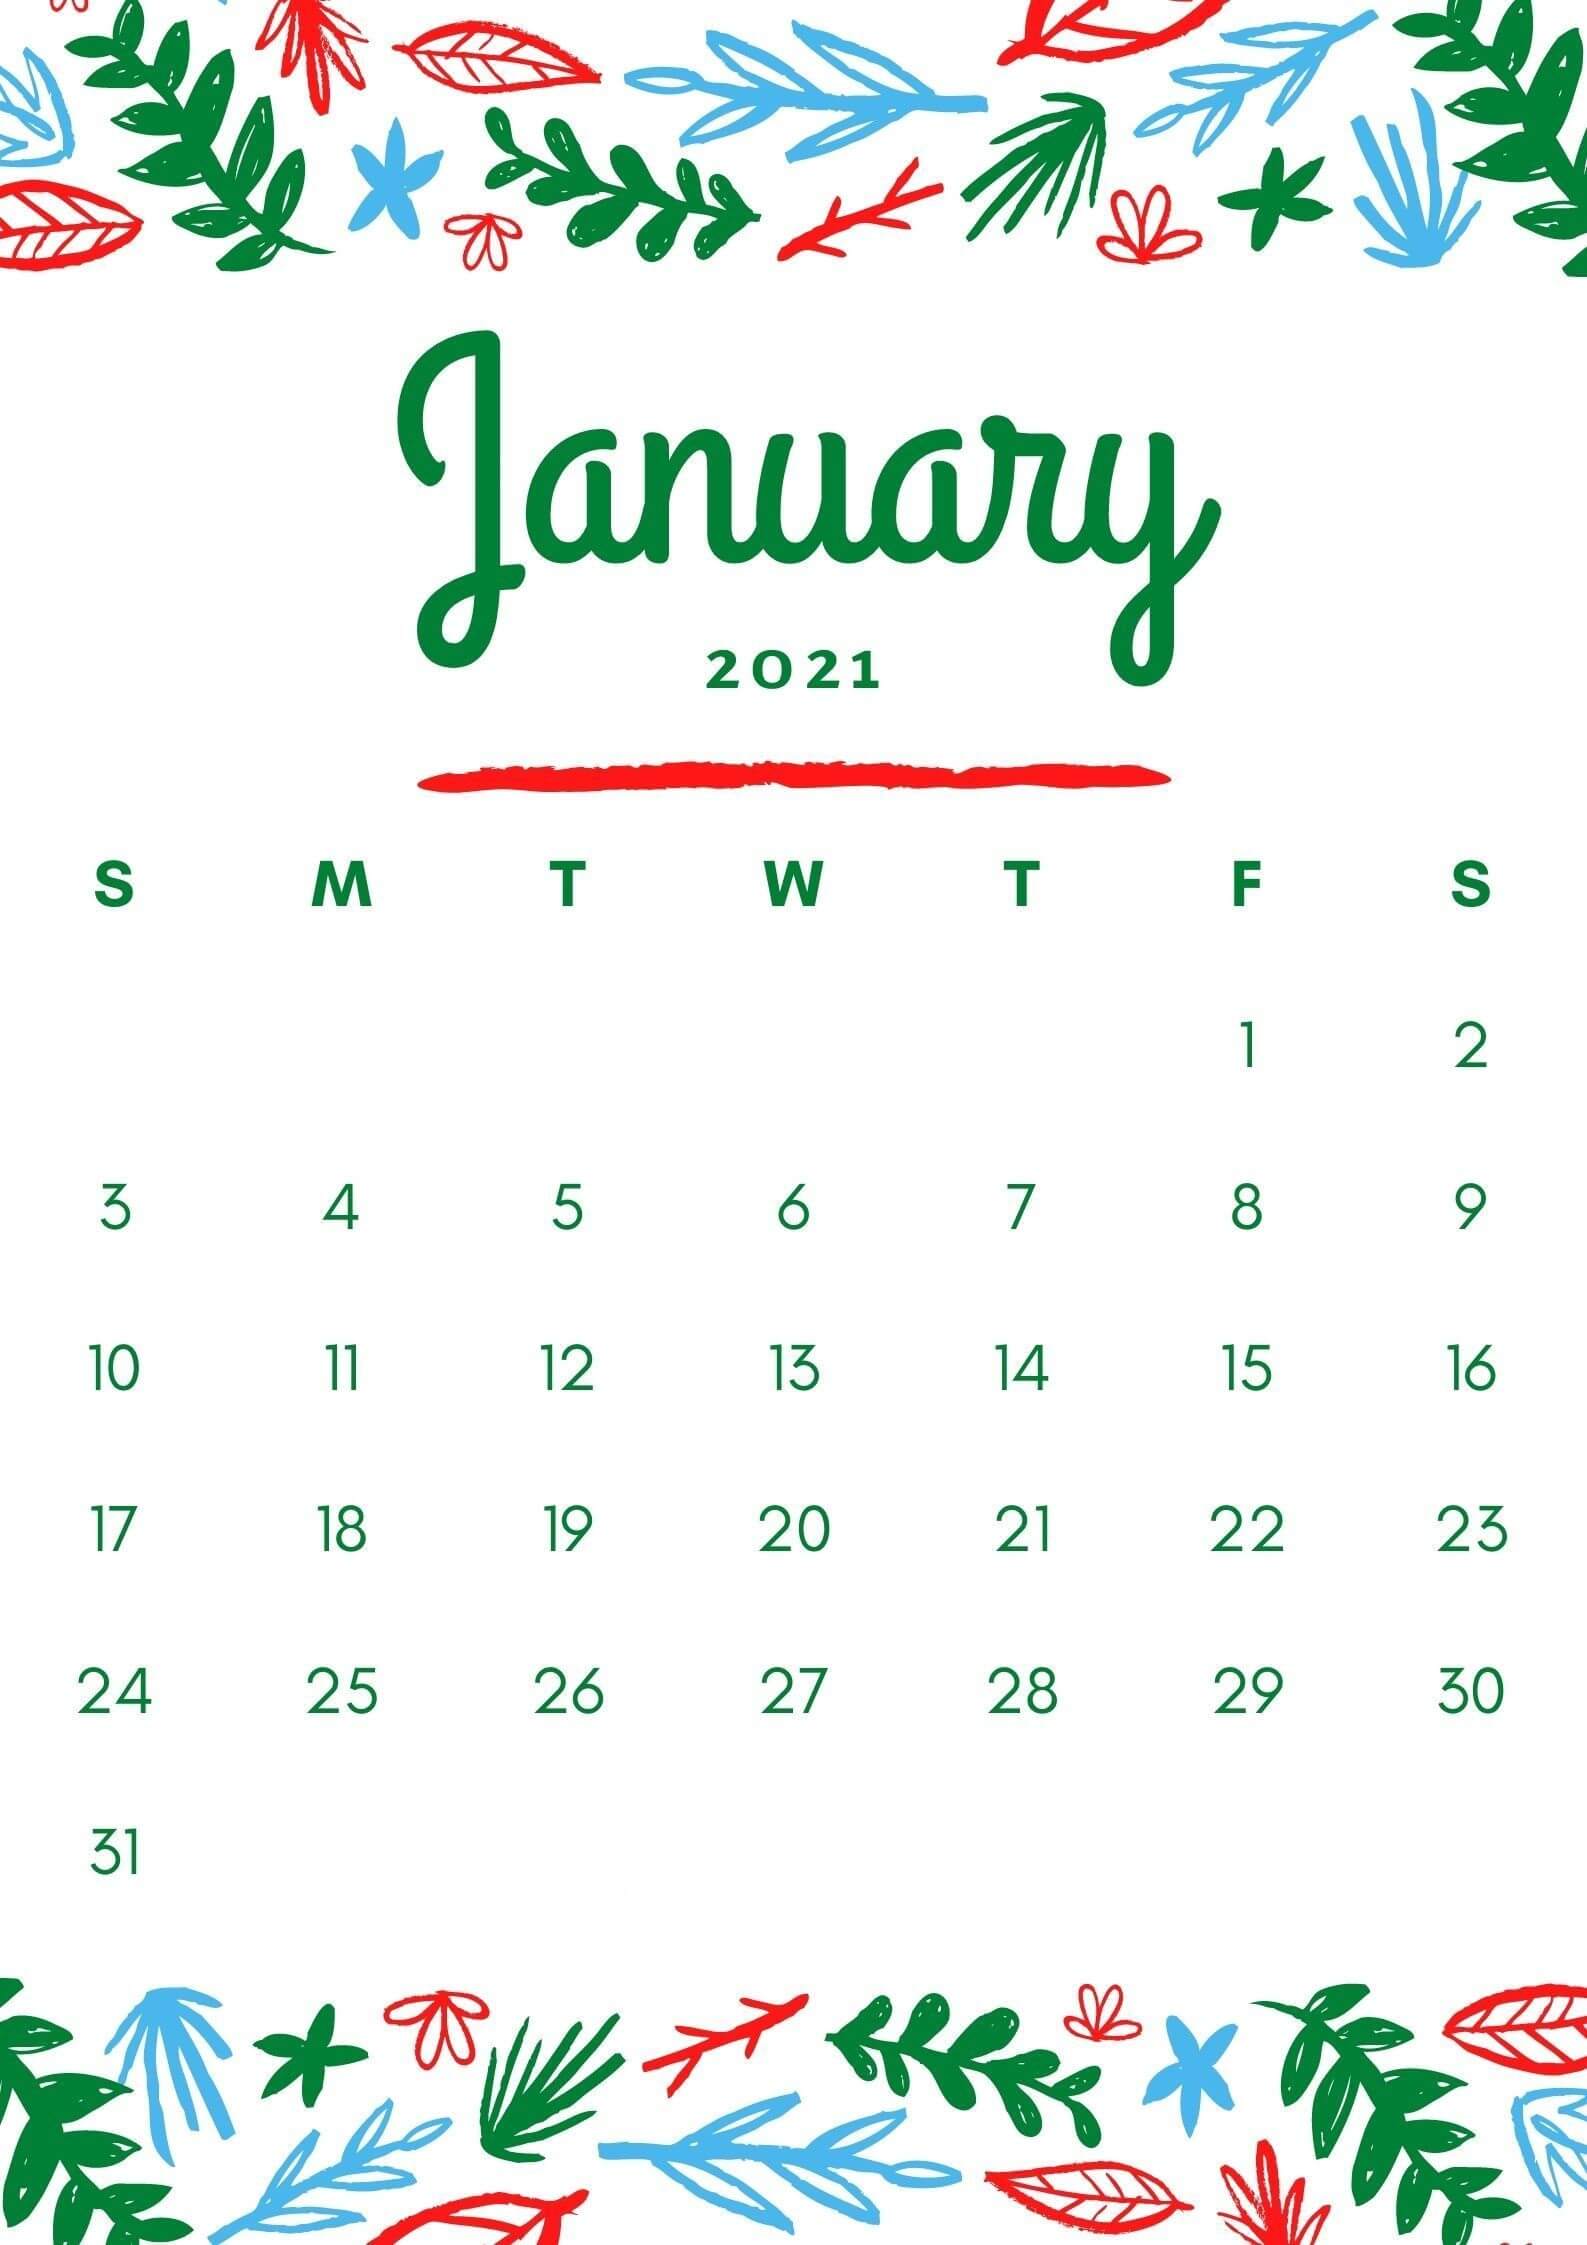 January 2021 Floral Calendar Wallpaper